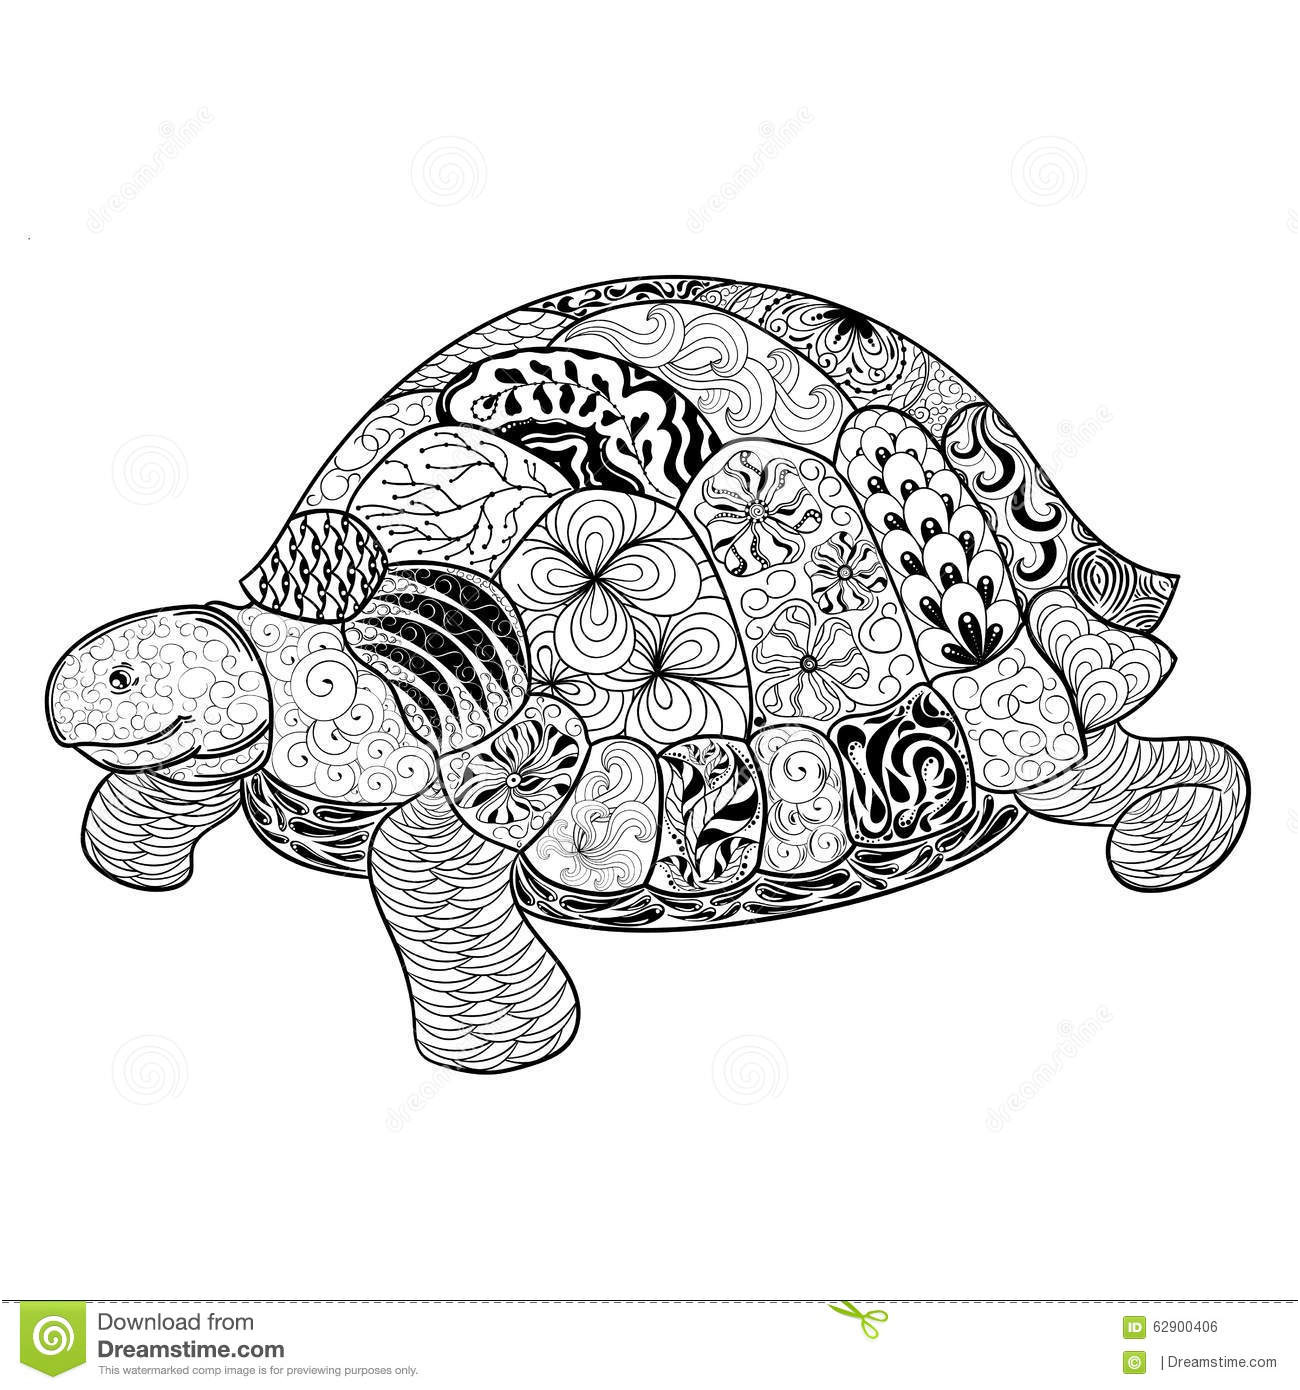 stock illustration turtle doodle illustration hand drawn was created doodling style black white colors painted image white background image